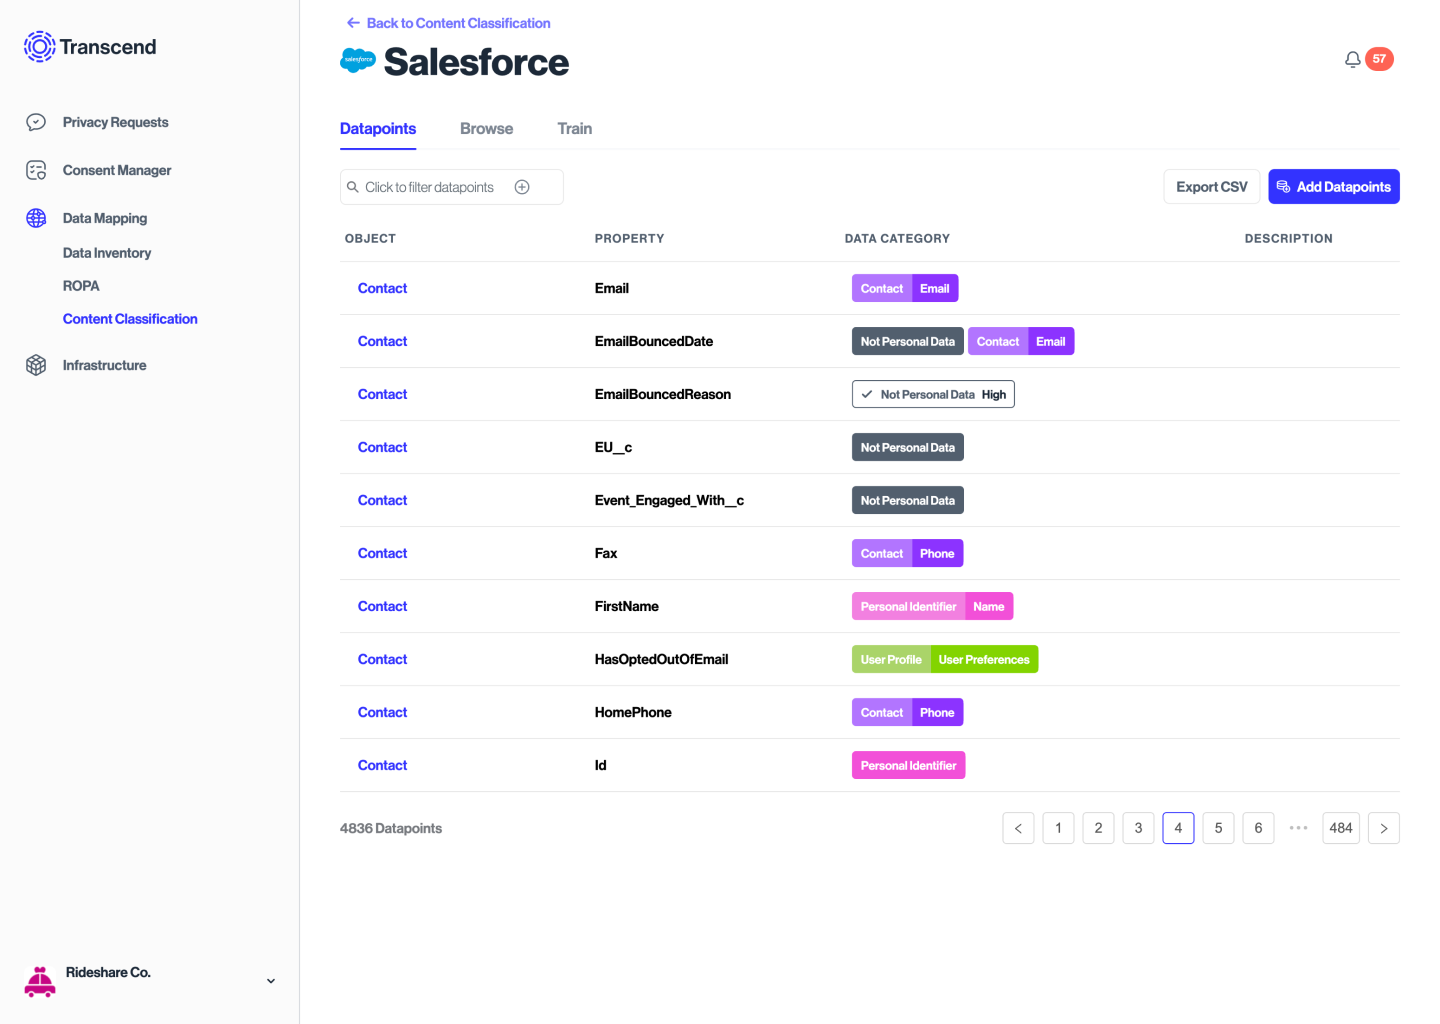 Salesforce integration content classification tab